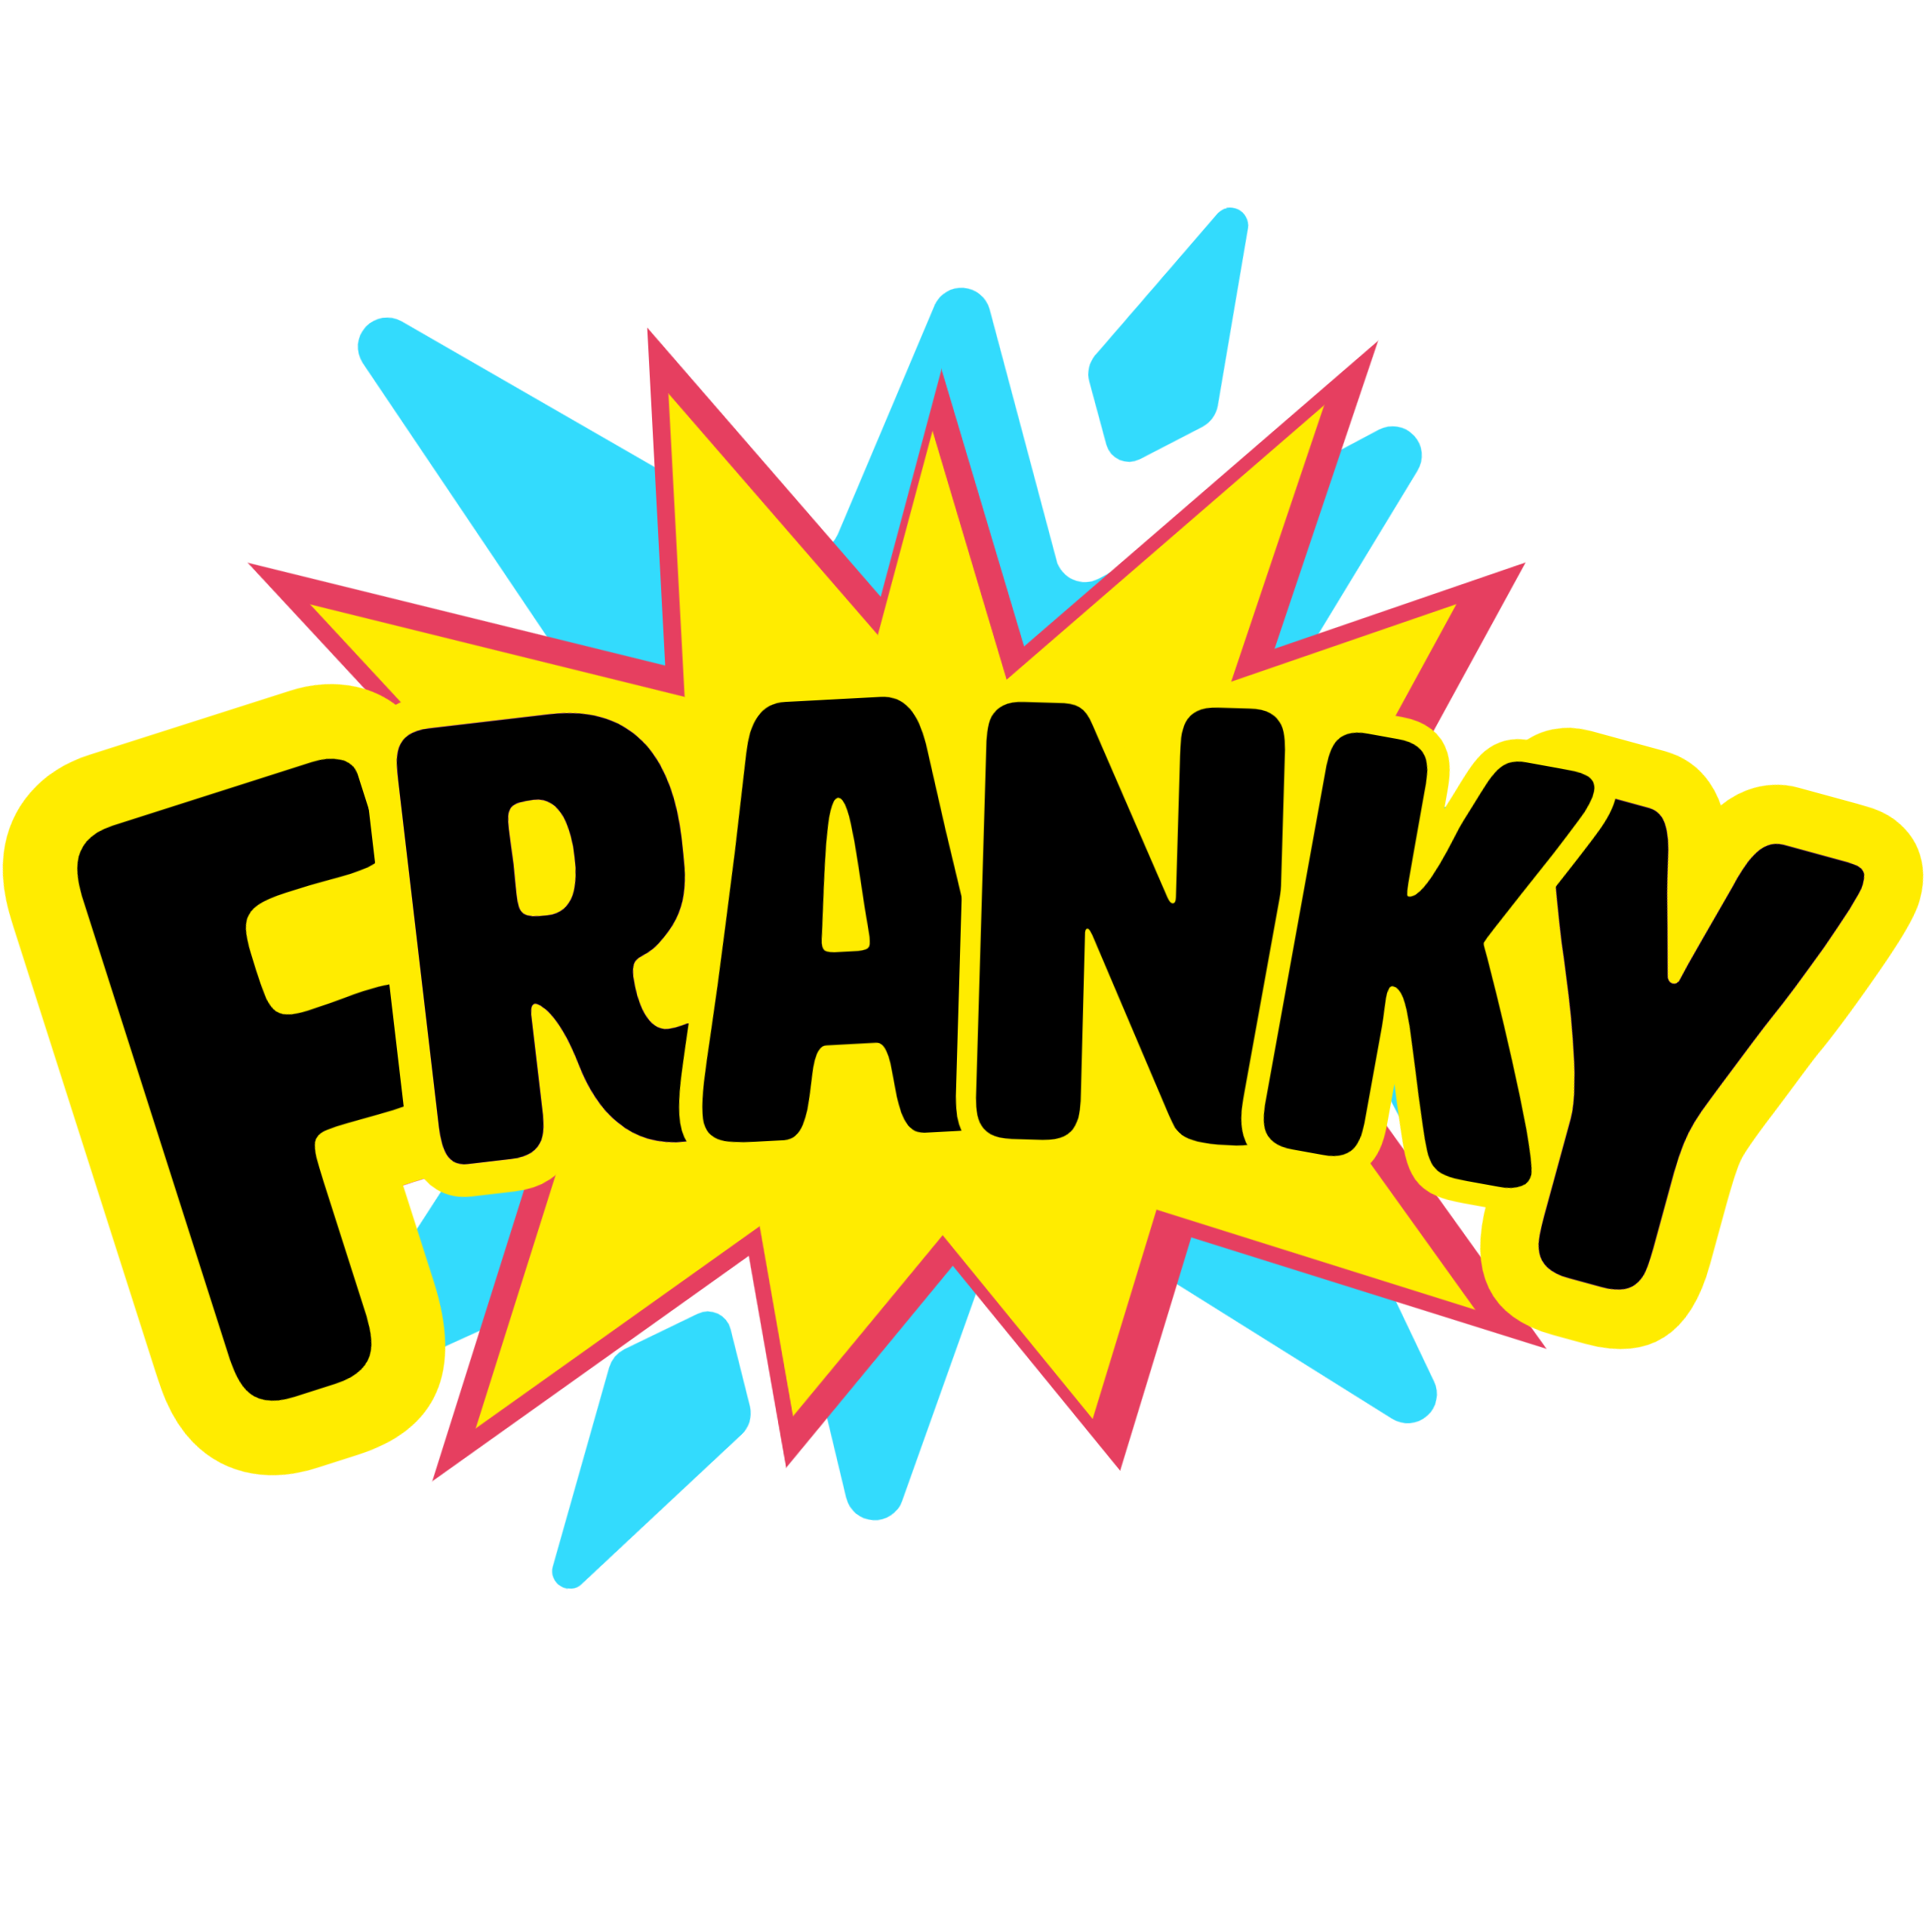 FRANKY